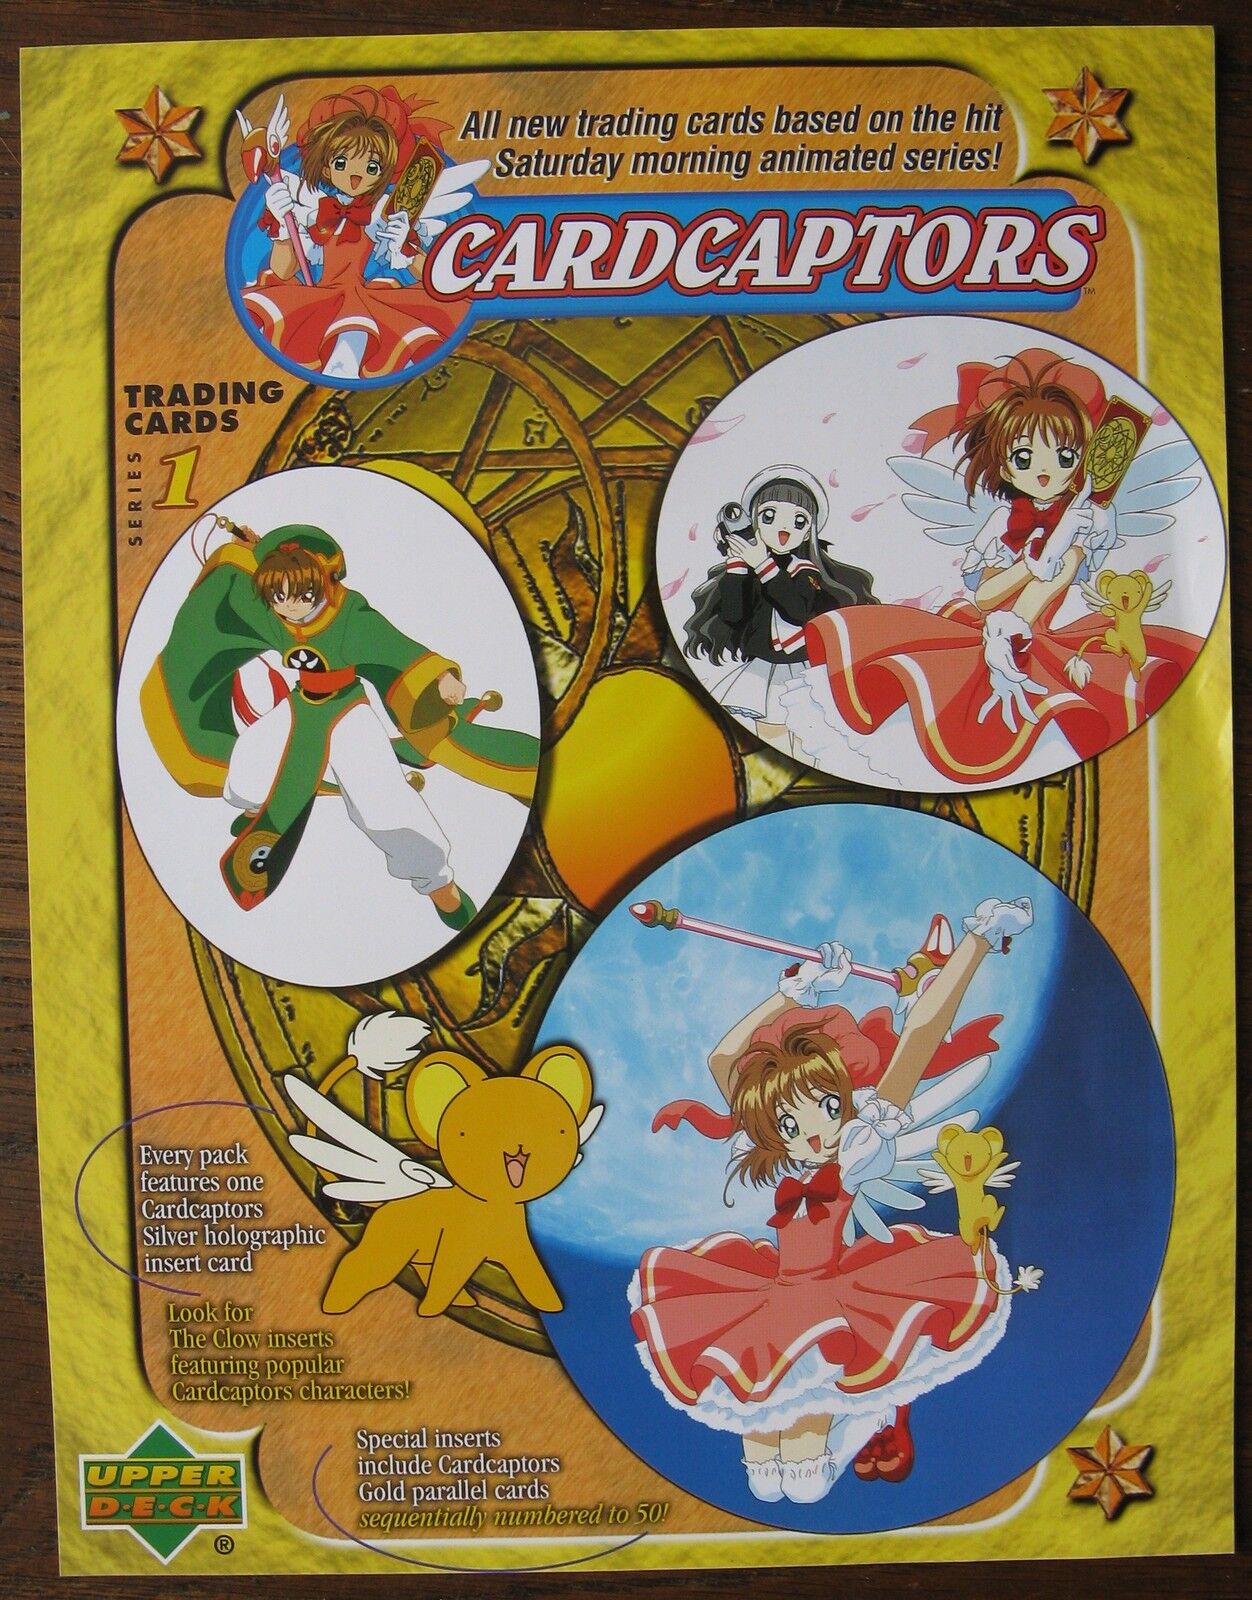 Cardcaptors Trading Cards Sell Sheet (no cards) 2000 Upper Deck